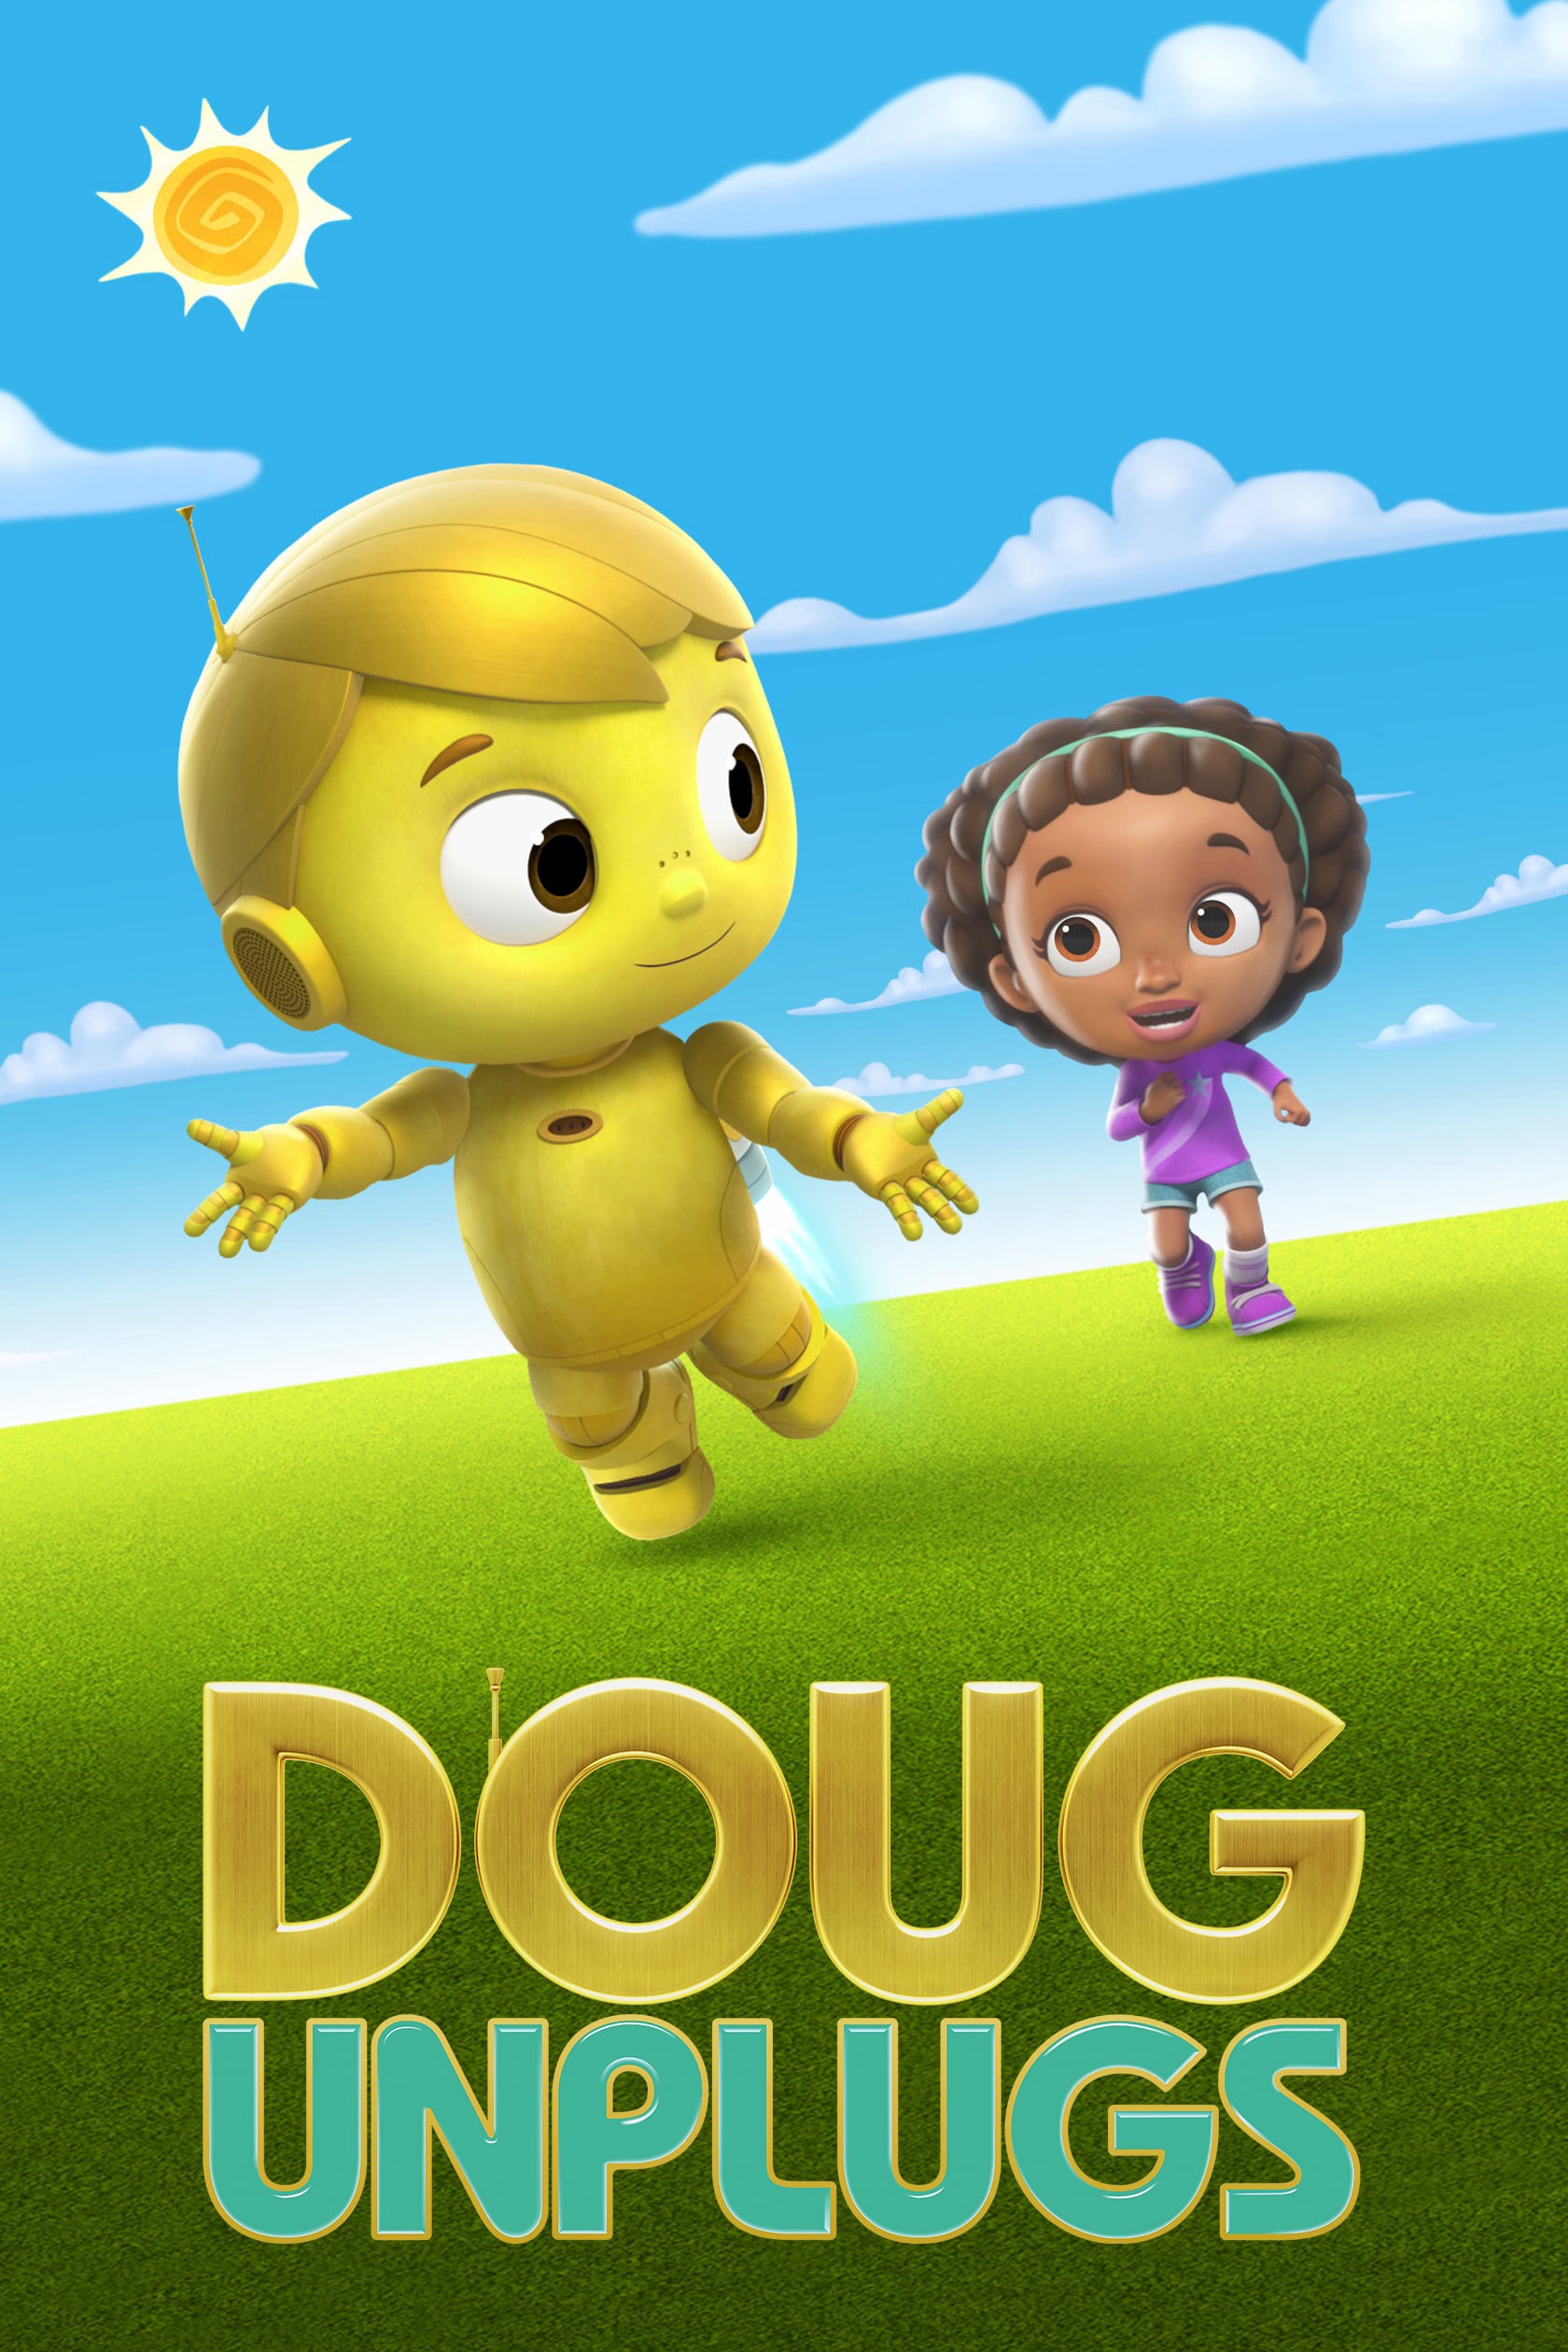 Doug Unplugs (TV Series 2020– ) - IMDb